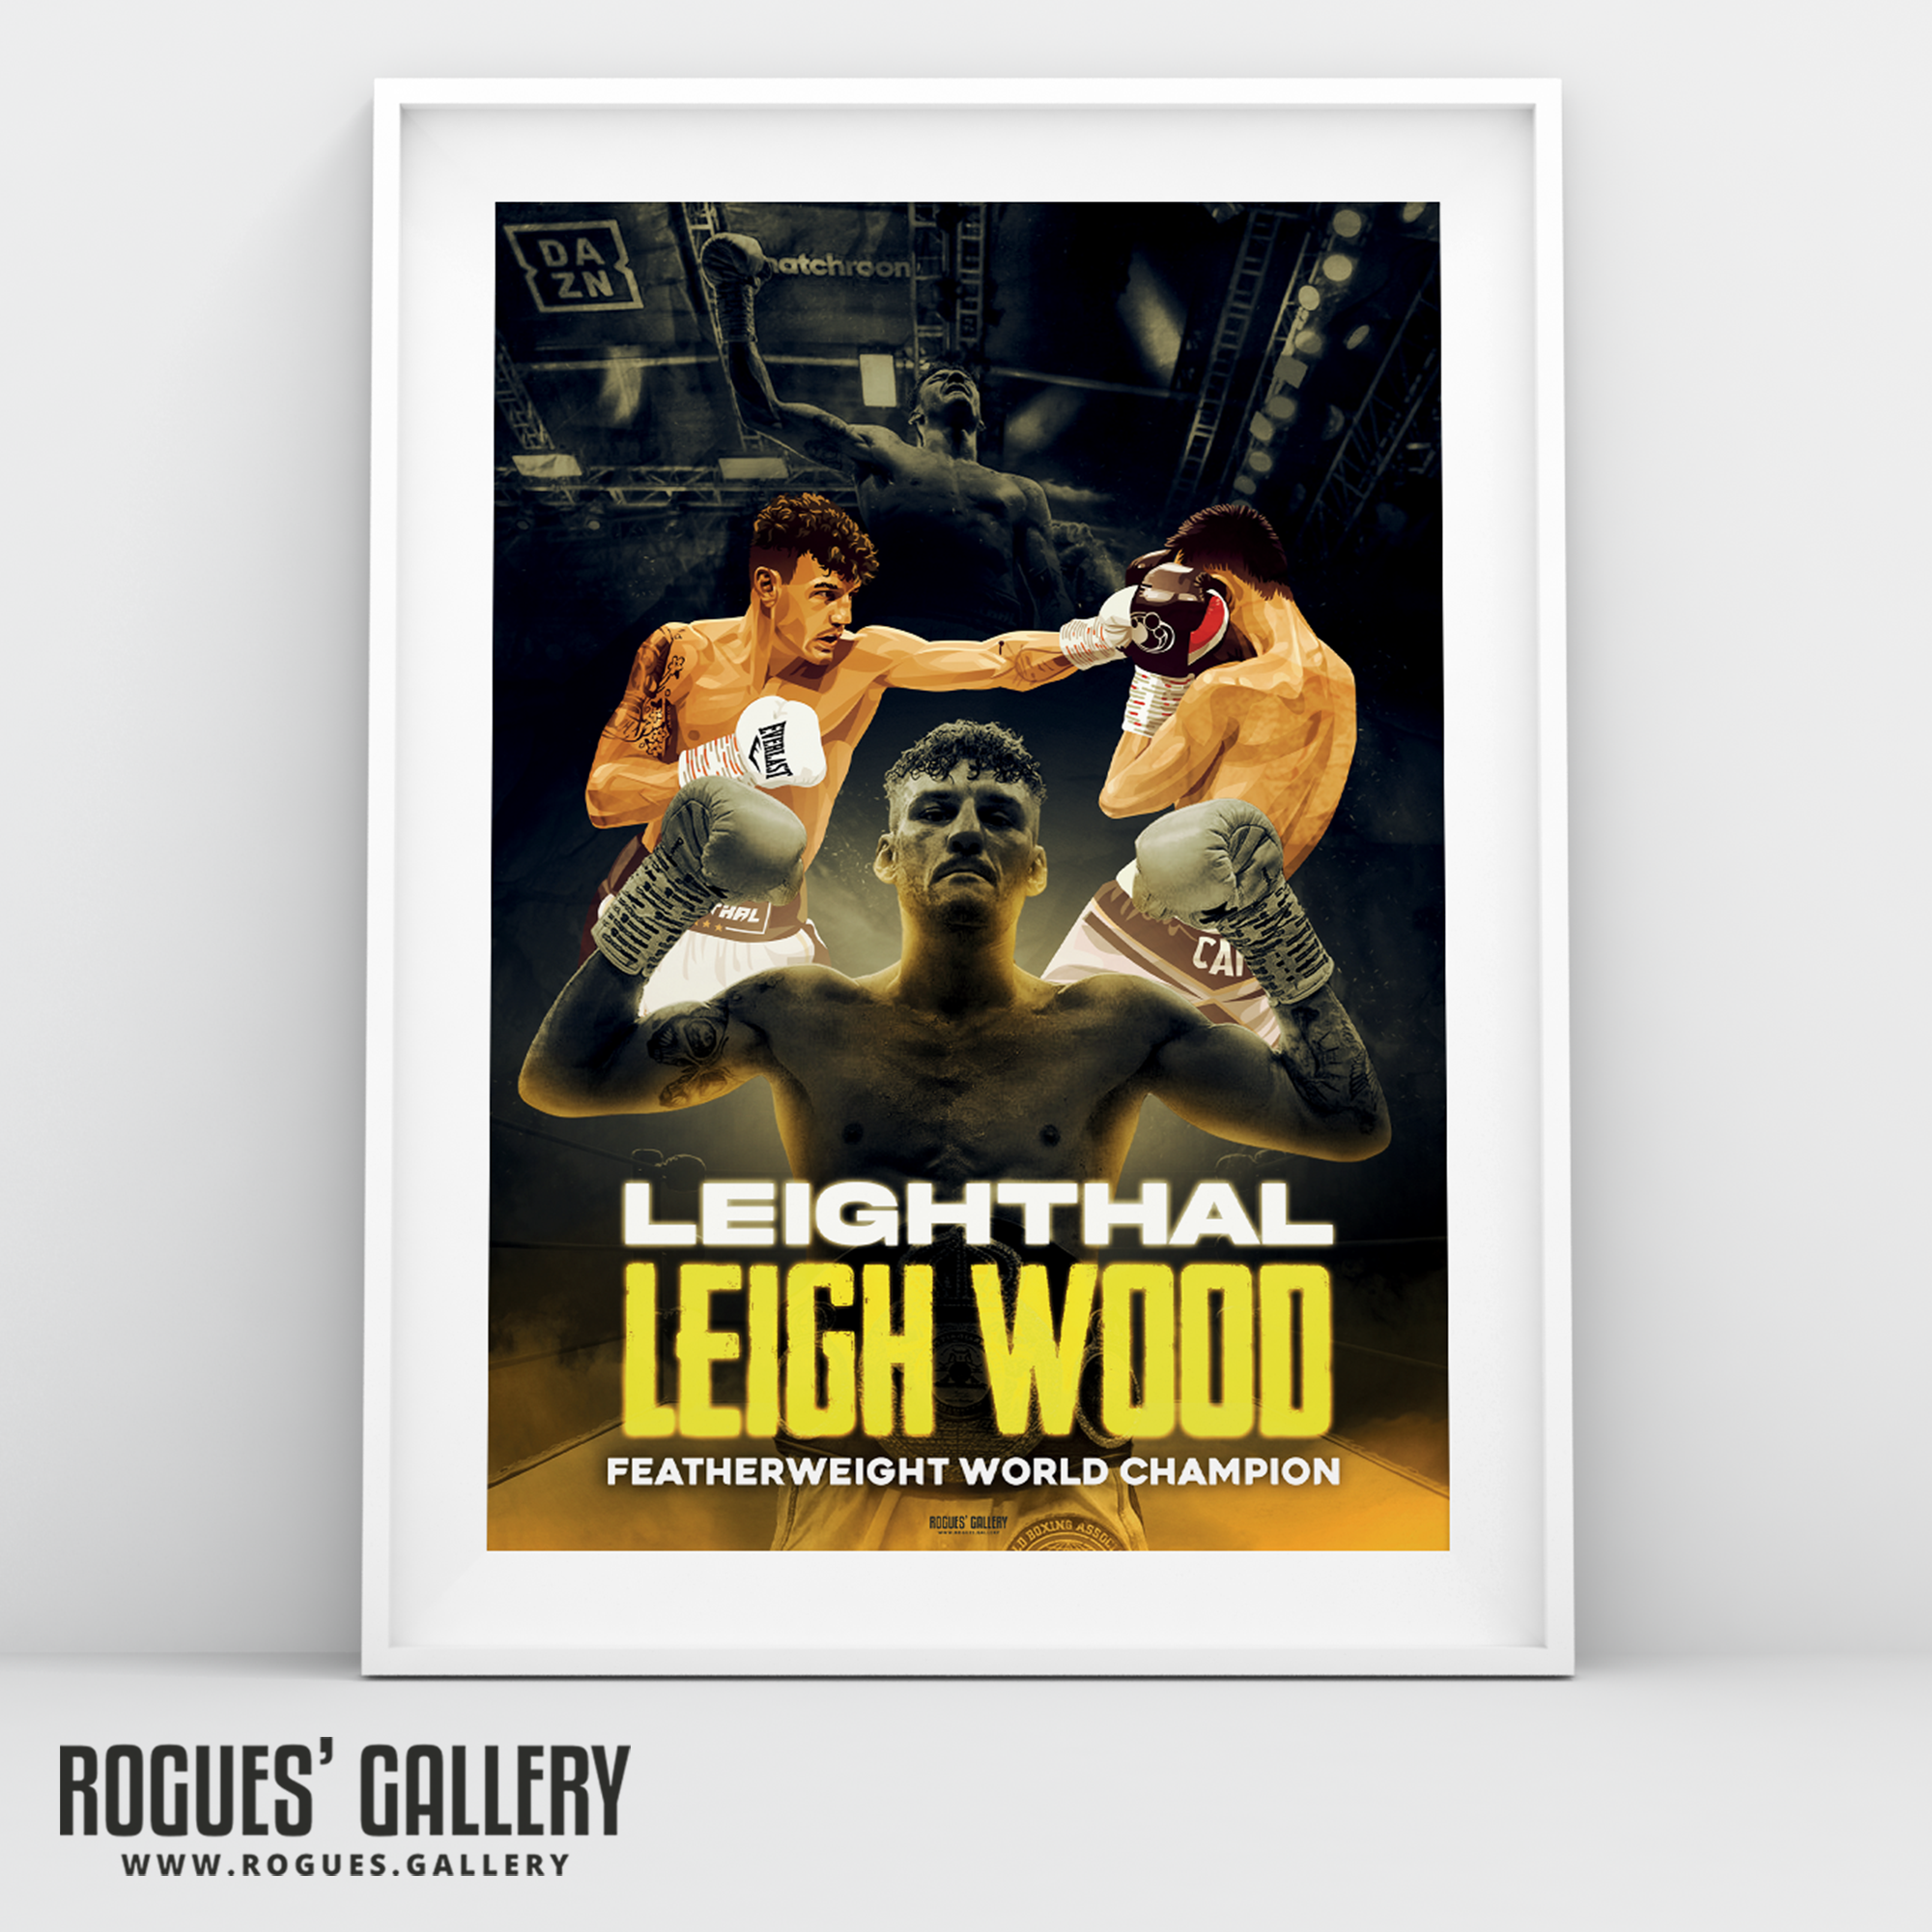 Leigh Wood Leighthal Boxer boxing memorabilia Featherweight World Champion Nottingham art DAZN A3 print